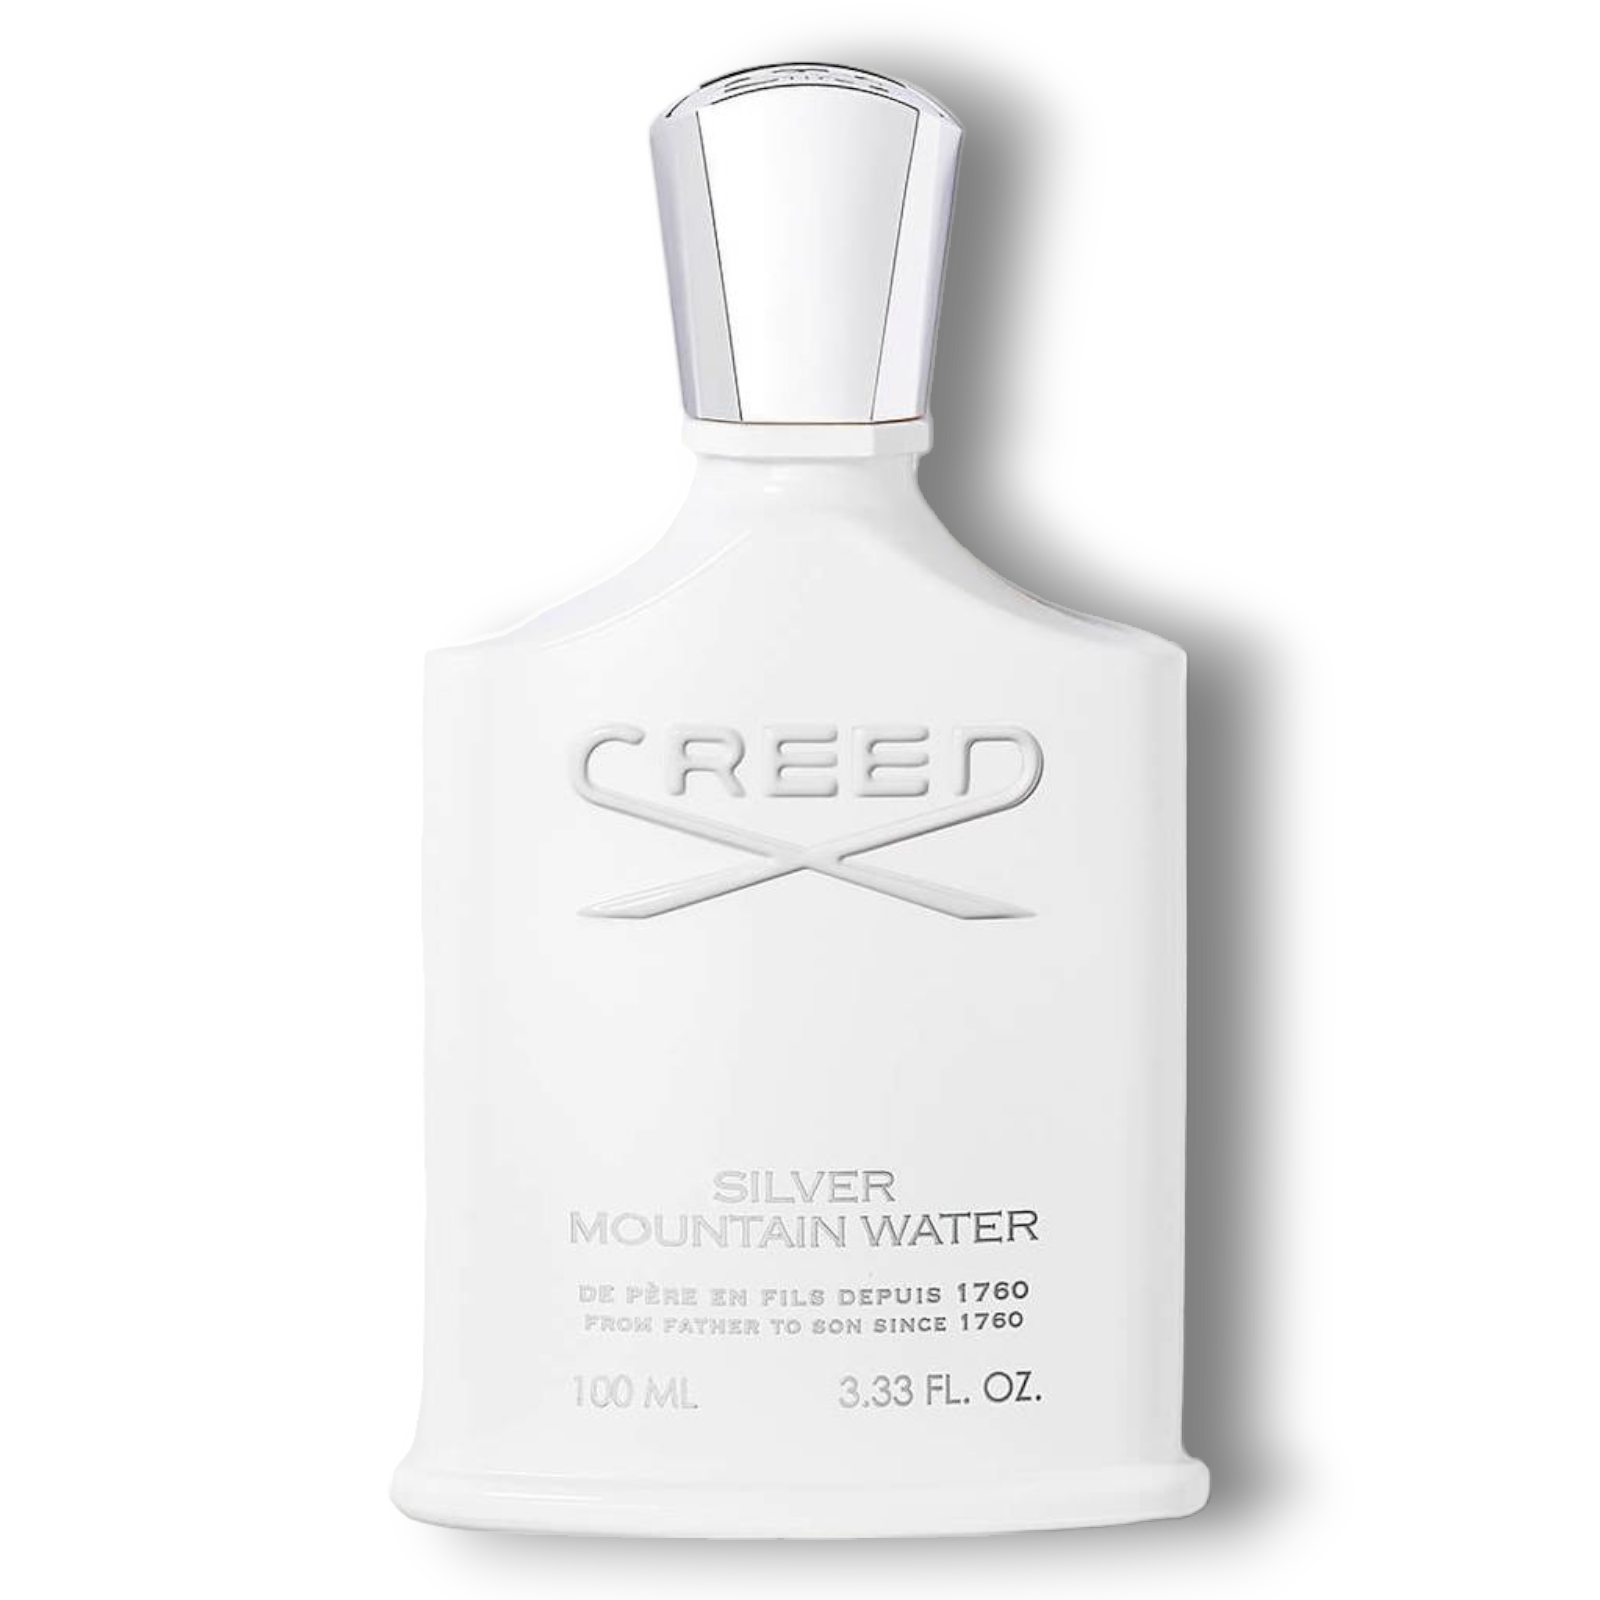 Silver Mountain Water Creed